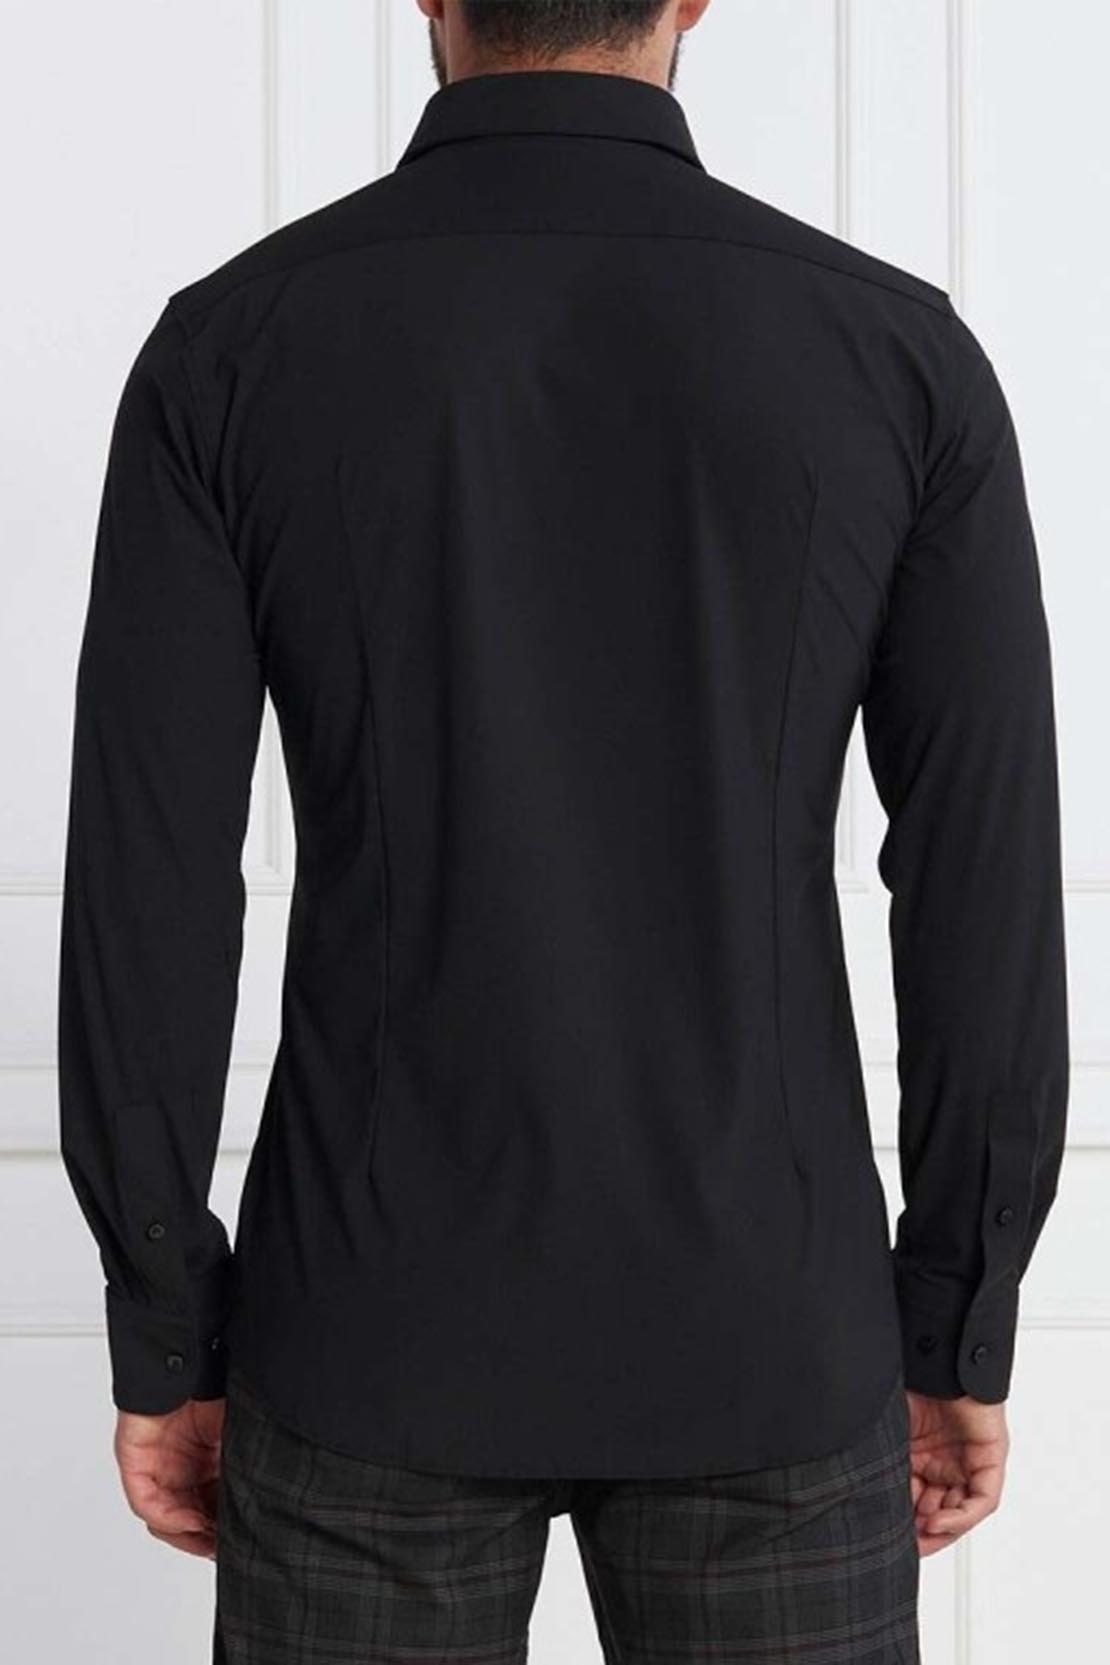 BOSS - H-HANK-KENT Black Stretch Cotton SLIM FIT Shirt 50503554 001